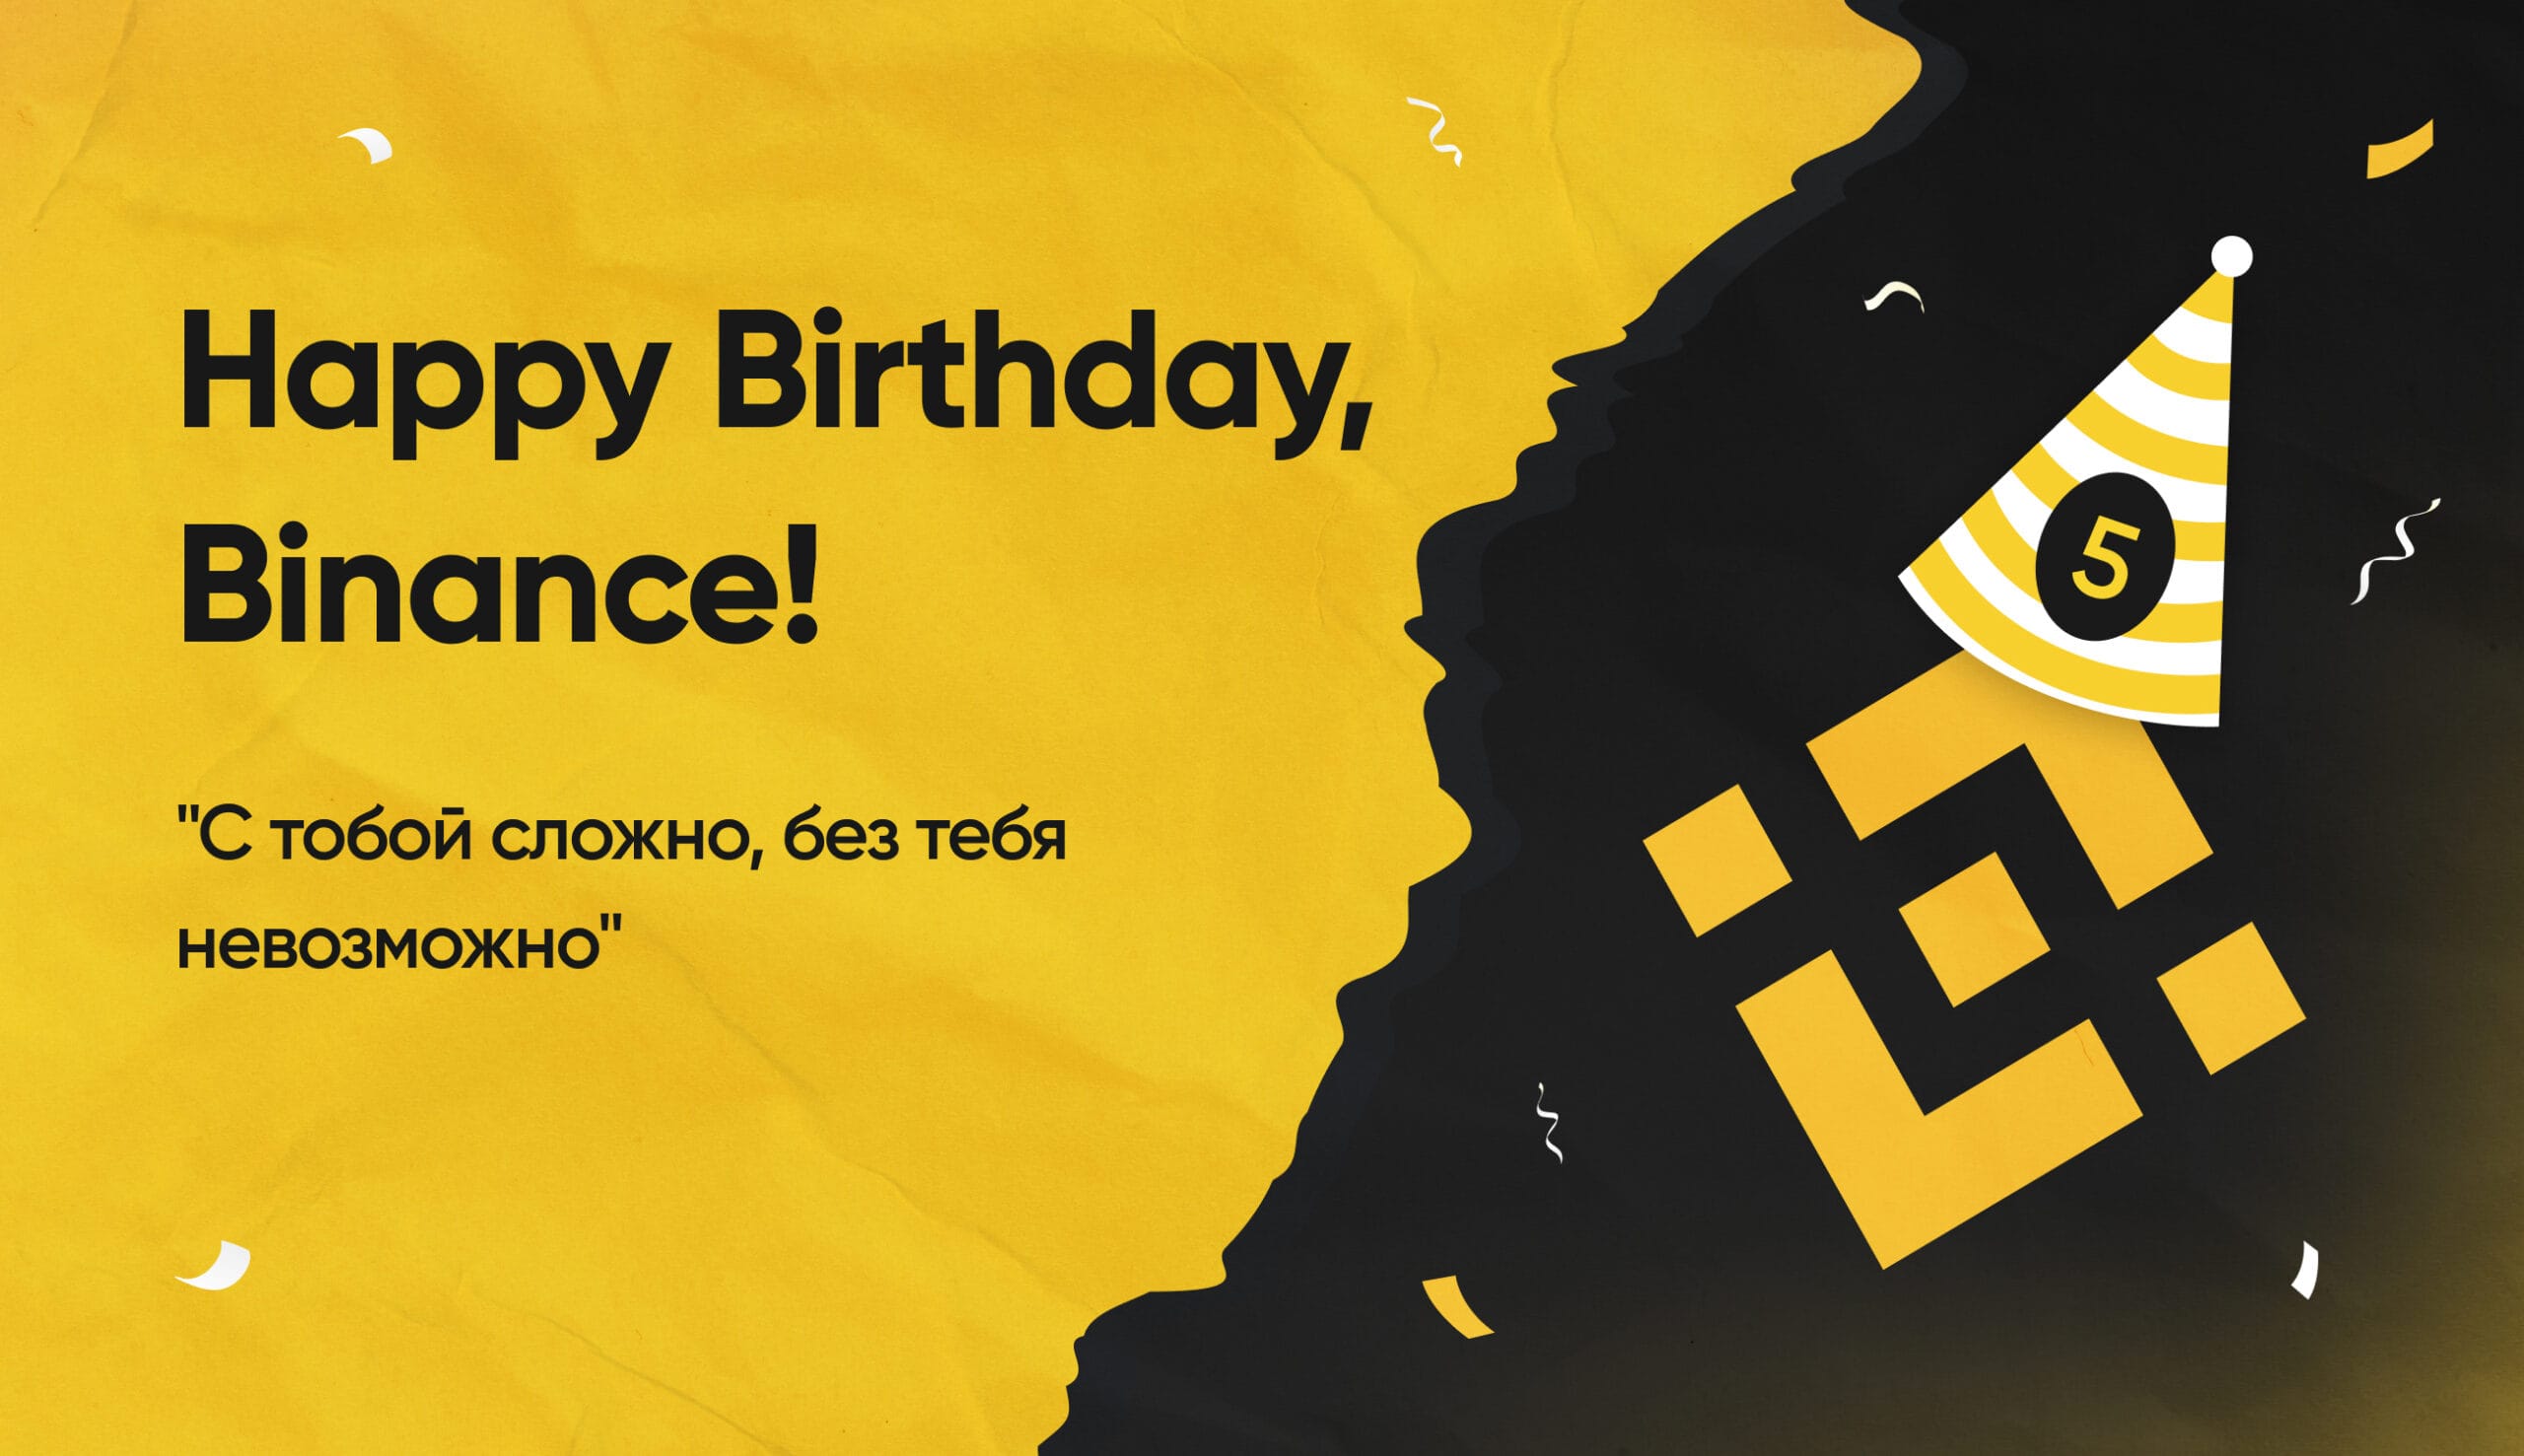 Happy Birthday, Binance! Путь Binance вместе с Incrypted. Заглавный коллаж новости.